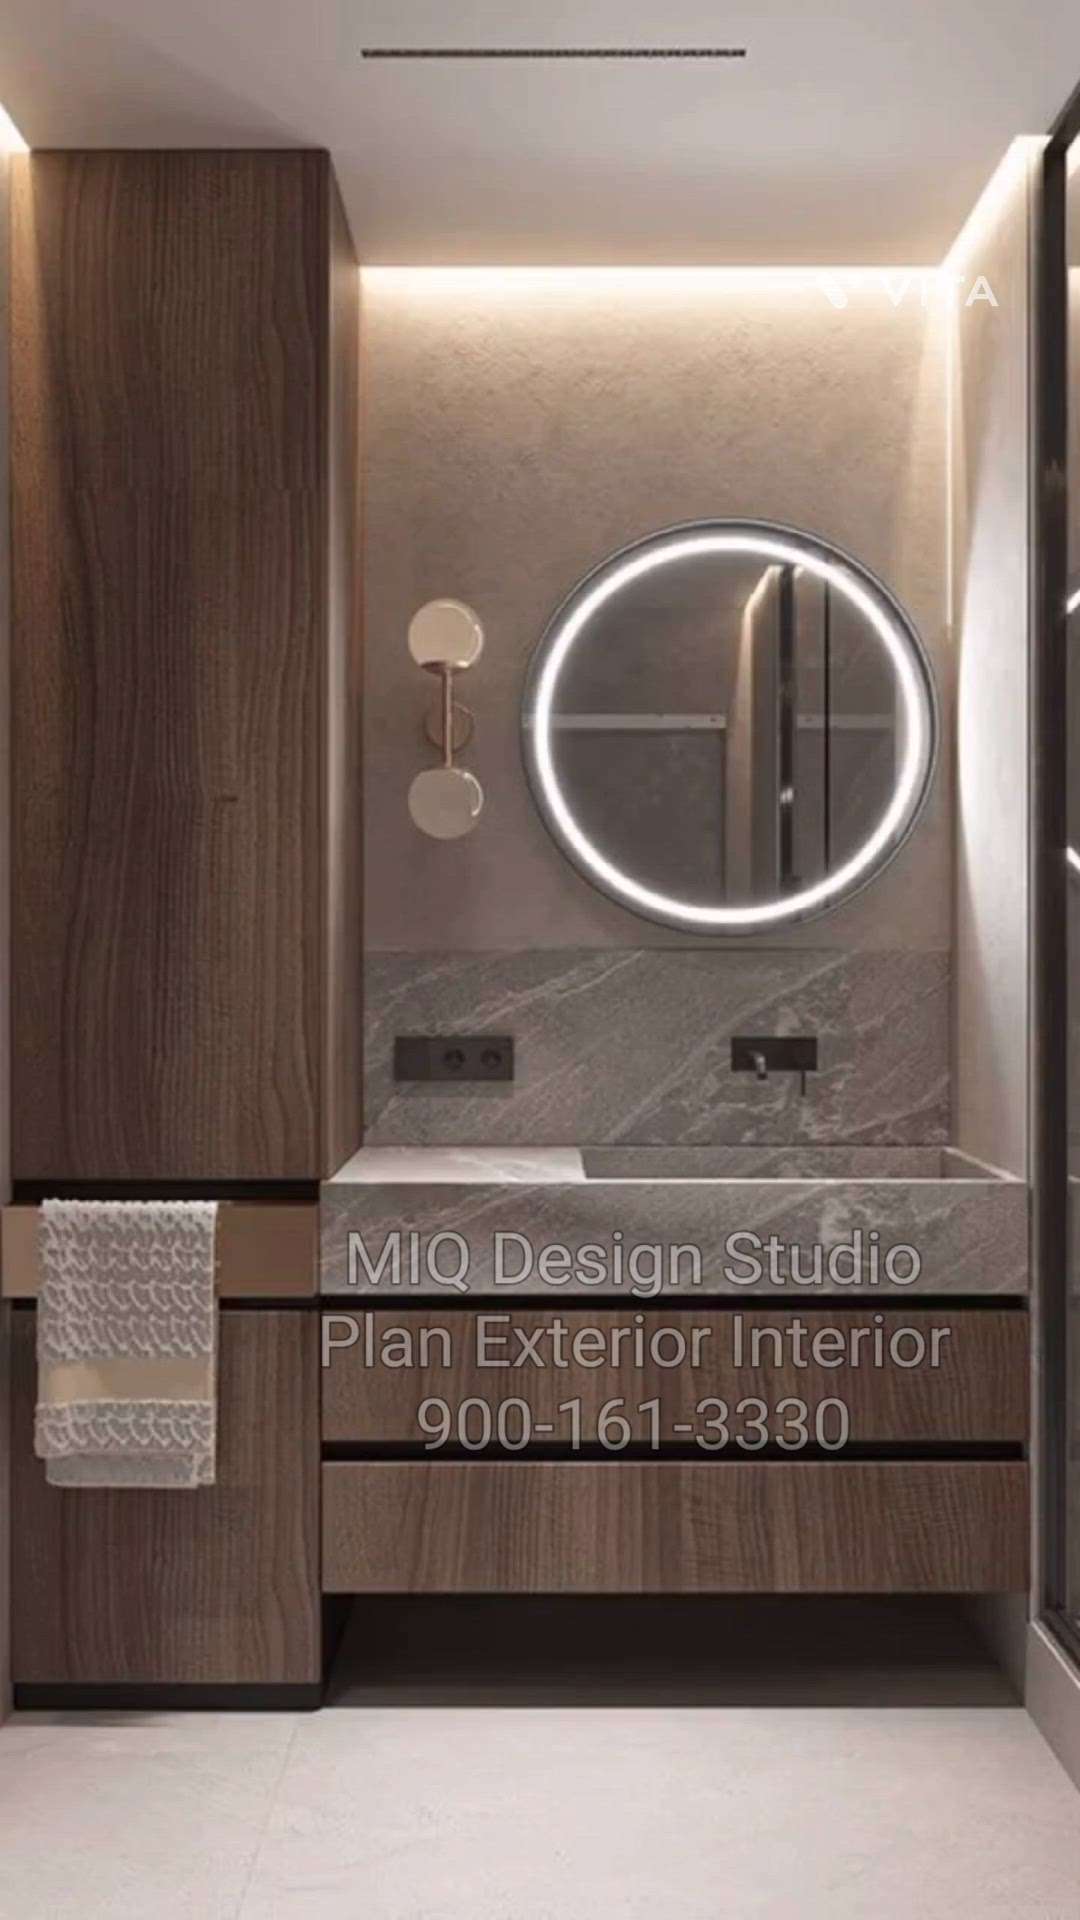 #MIQ_Design_Studio
#PLAN l #EXTERIOR l #INTERIOR
#Fast_Service l #Best_Quality l #High_Resolution 
#Online_Offline_Service
900-161-3330